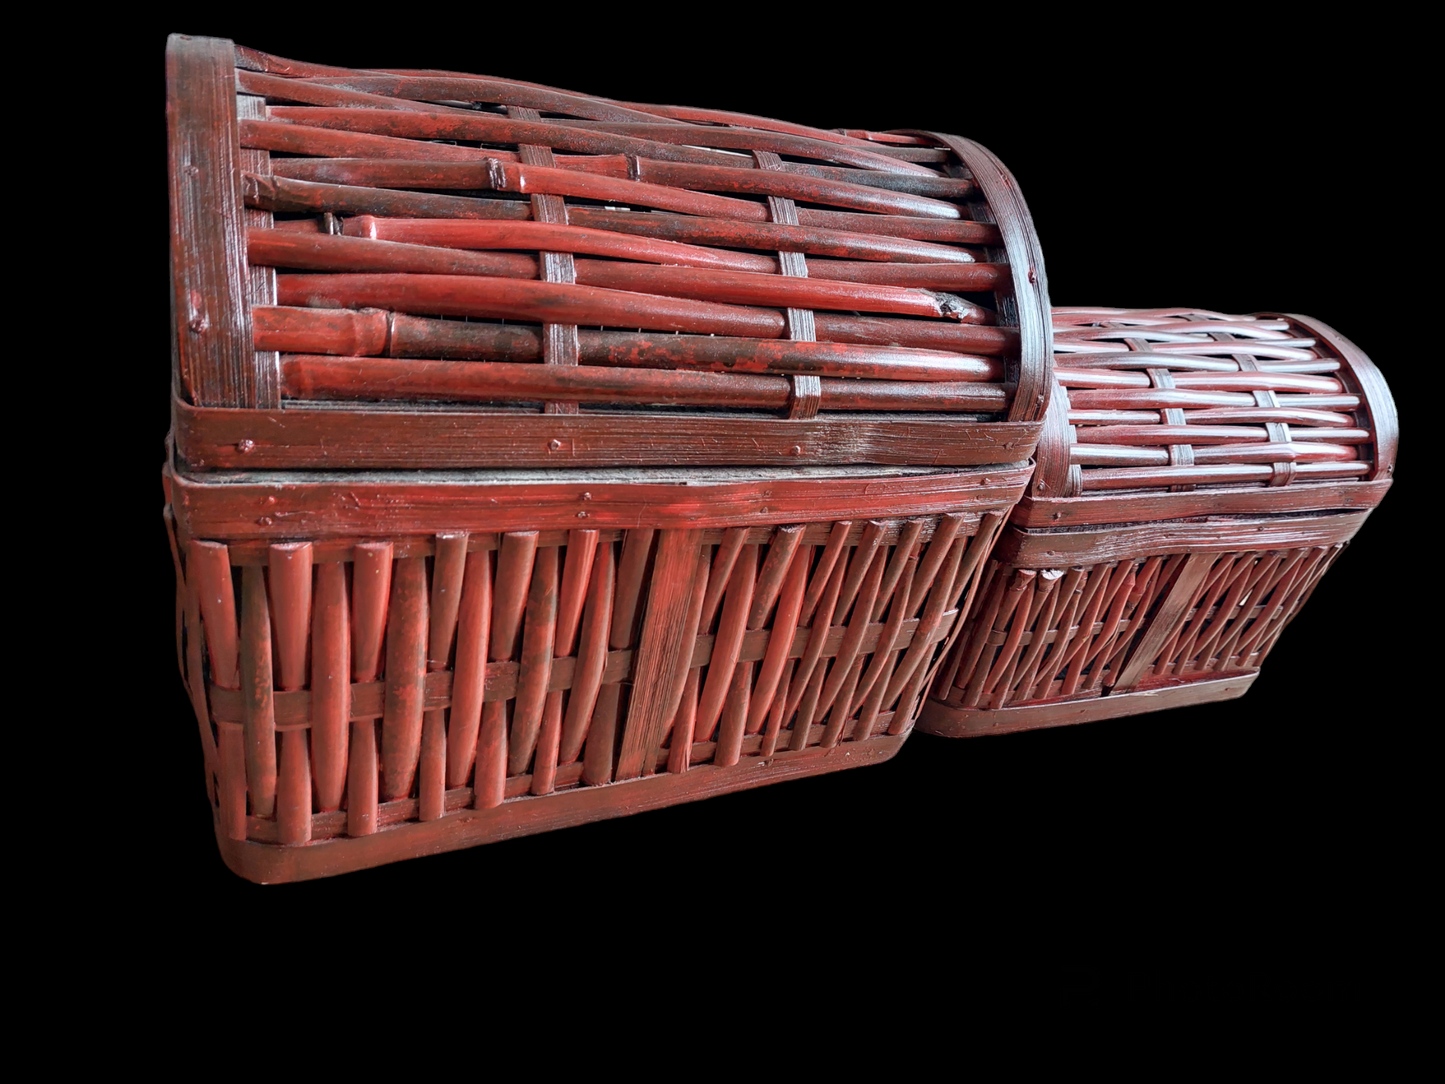 Nepalese wood and bamboo storage baskets